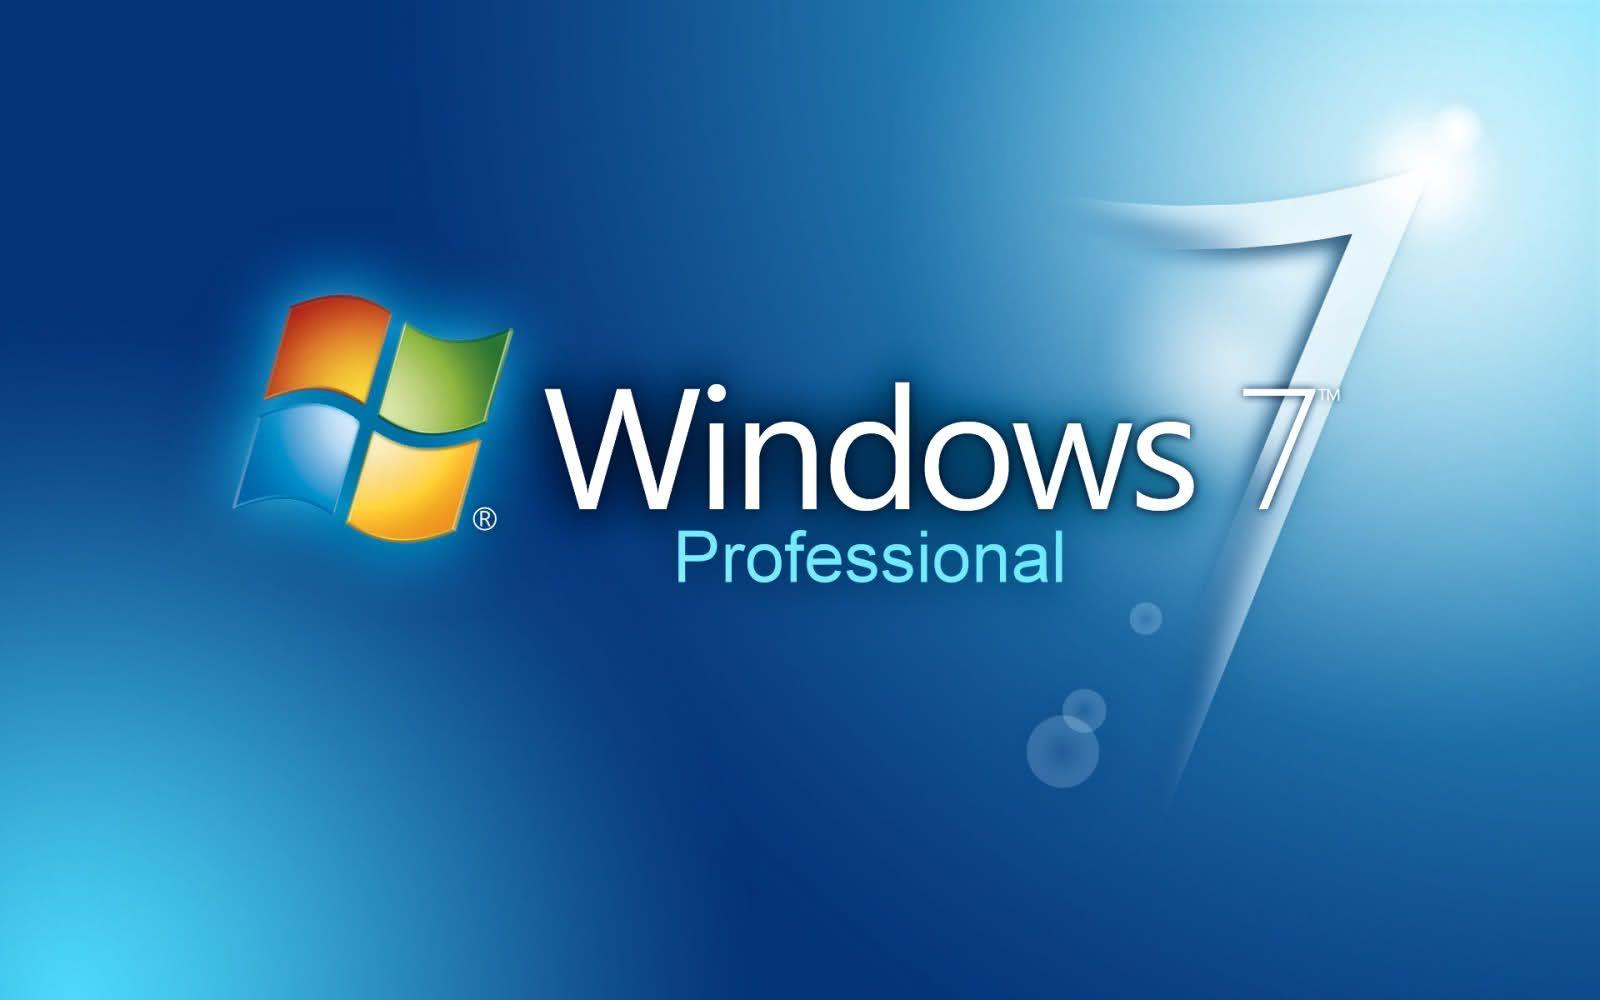 Windows 7 Professional Logo - Download Windows 7 Professional 64 bit ISO Files | Latest Free ...